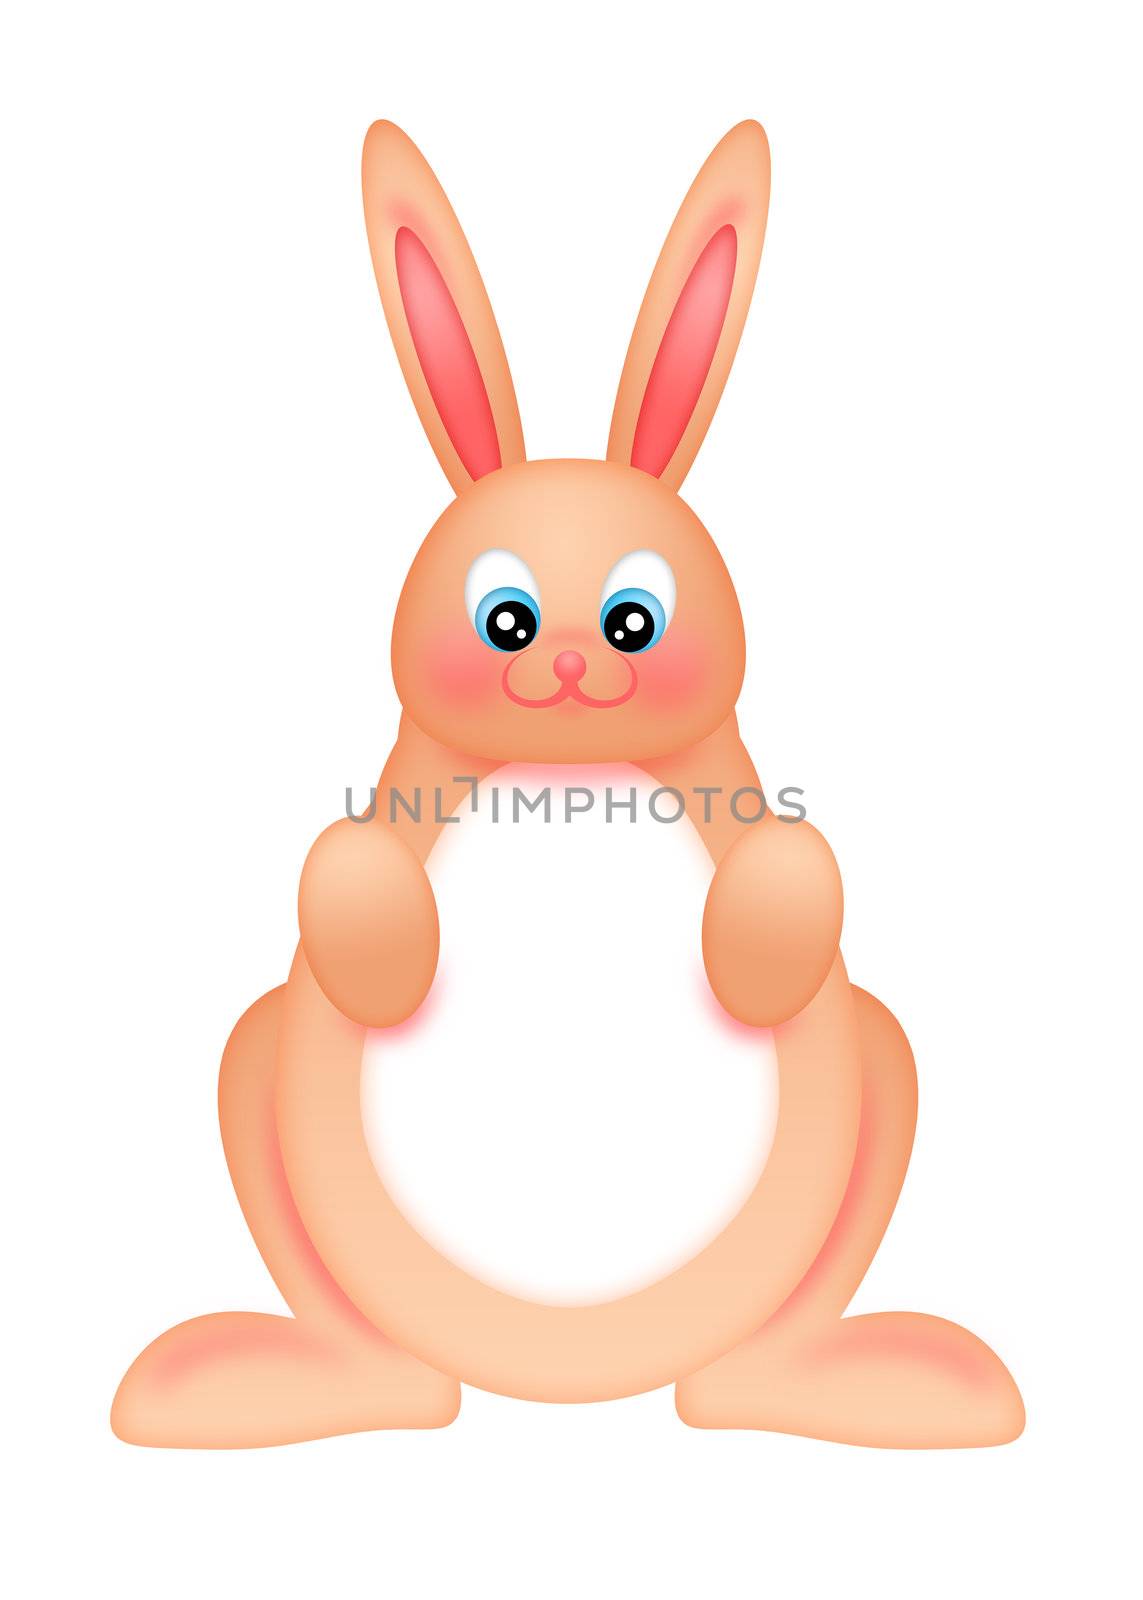 Happy Easter Bunny Rabbit Illustration by jpldesigns